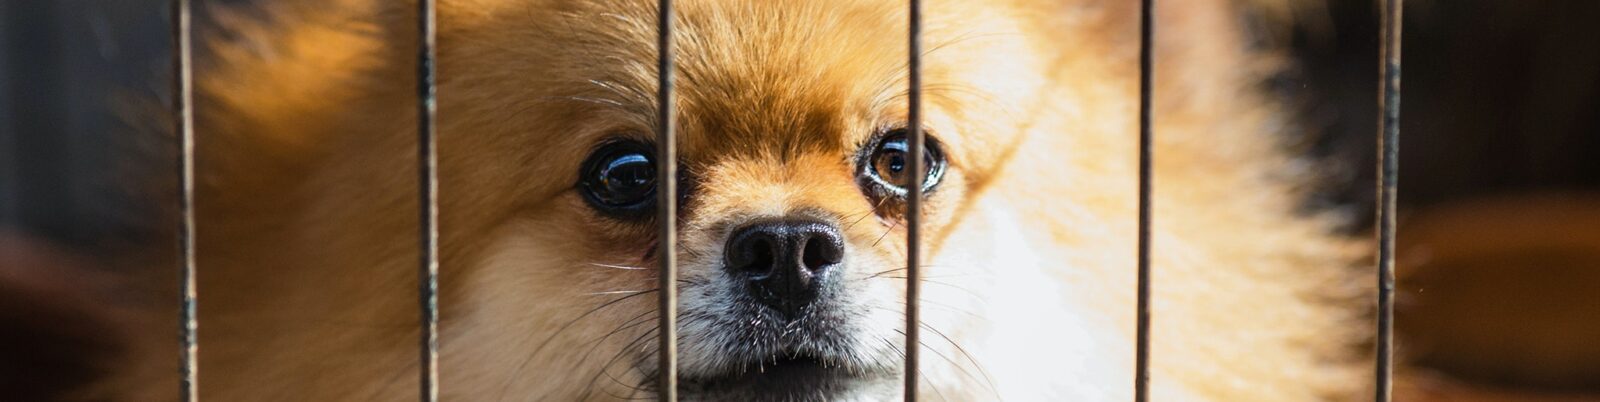 Pet Adoptions: 6 Reasons To Adopt, Not Buy